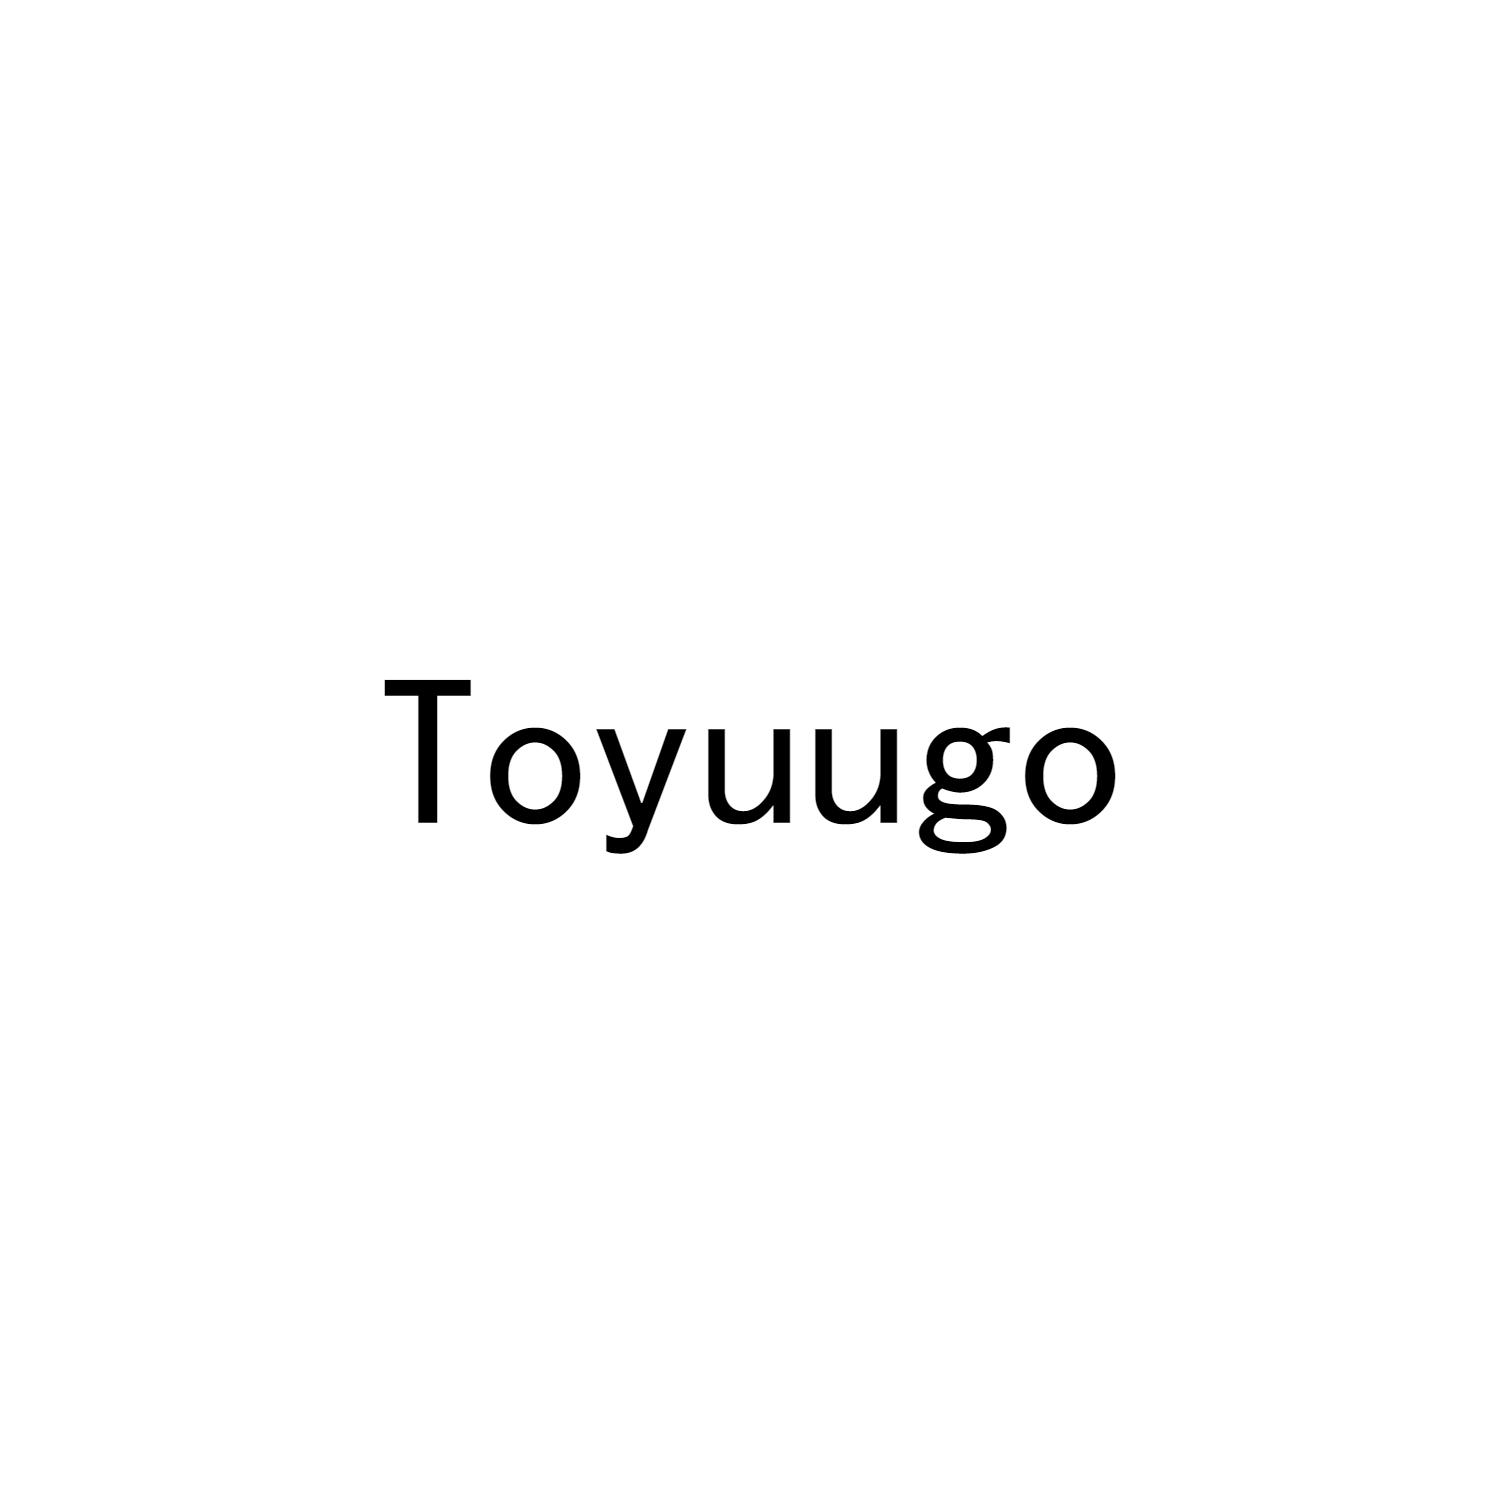 TOYUUGO